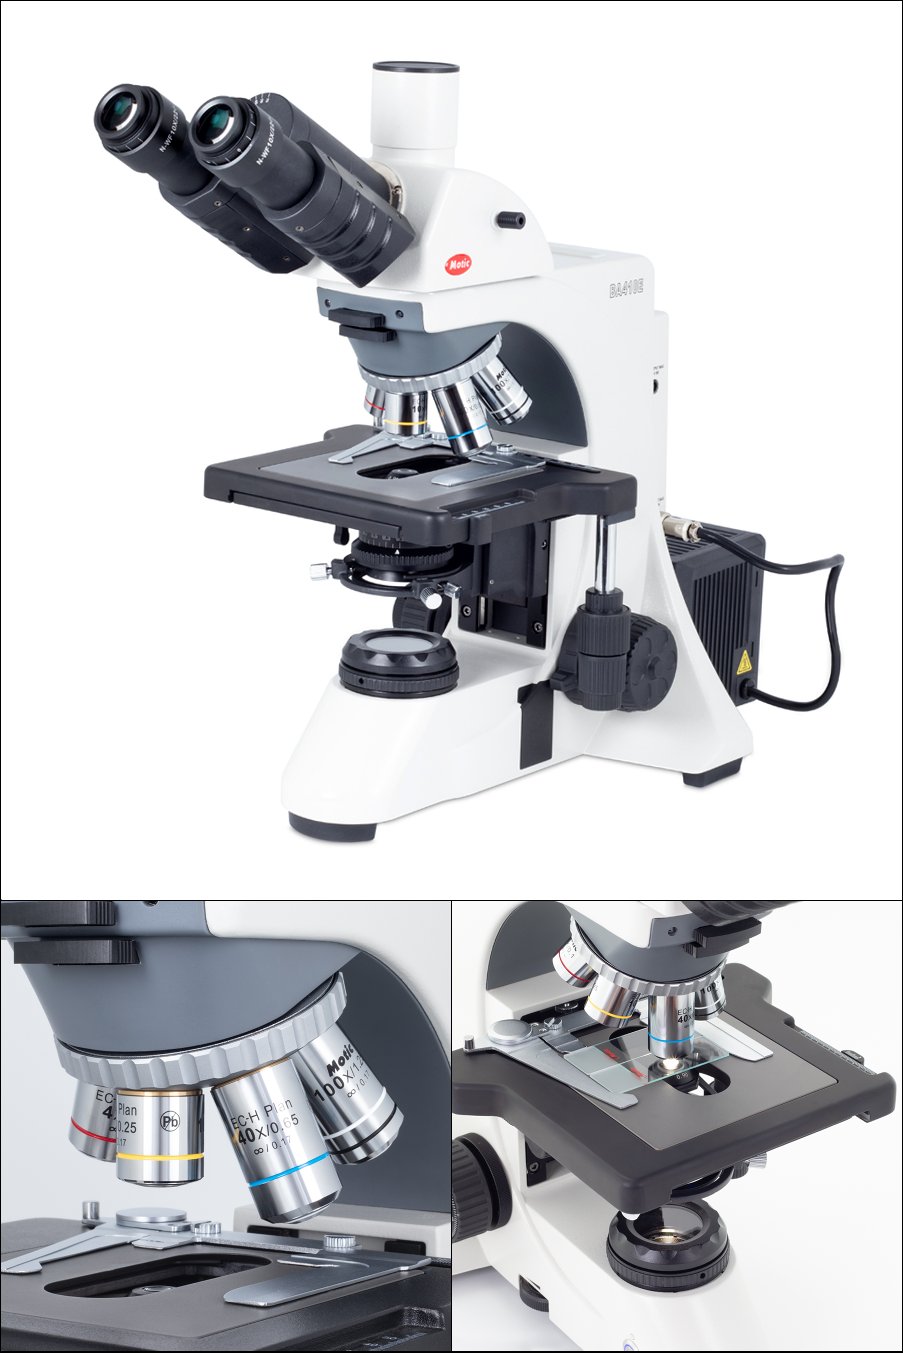 Microscopio BA410E Trinocular, iluminación halógena 50W y revólver portaobjetivos séxtuple BA410E Trino C6